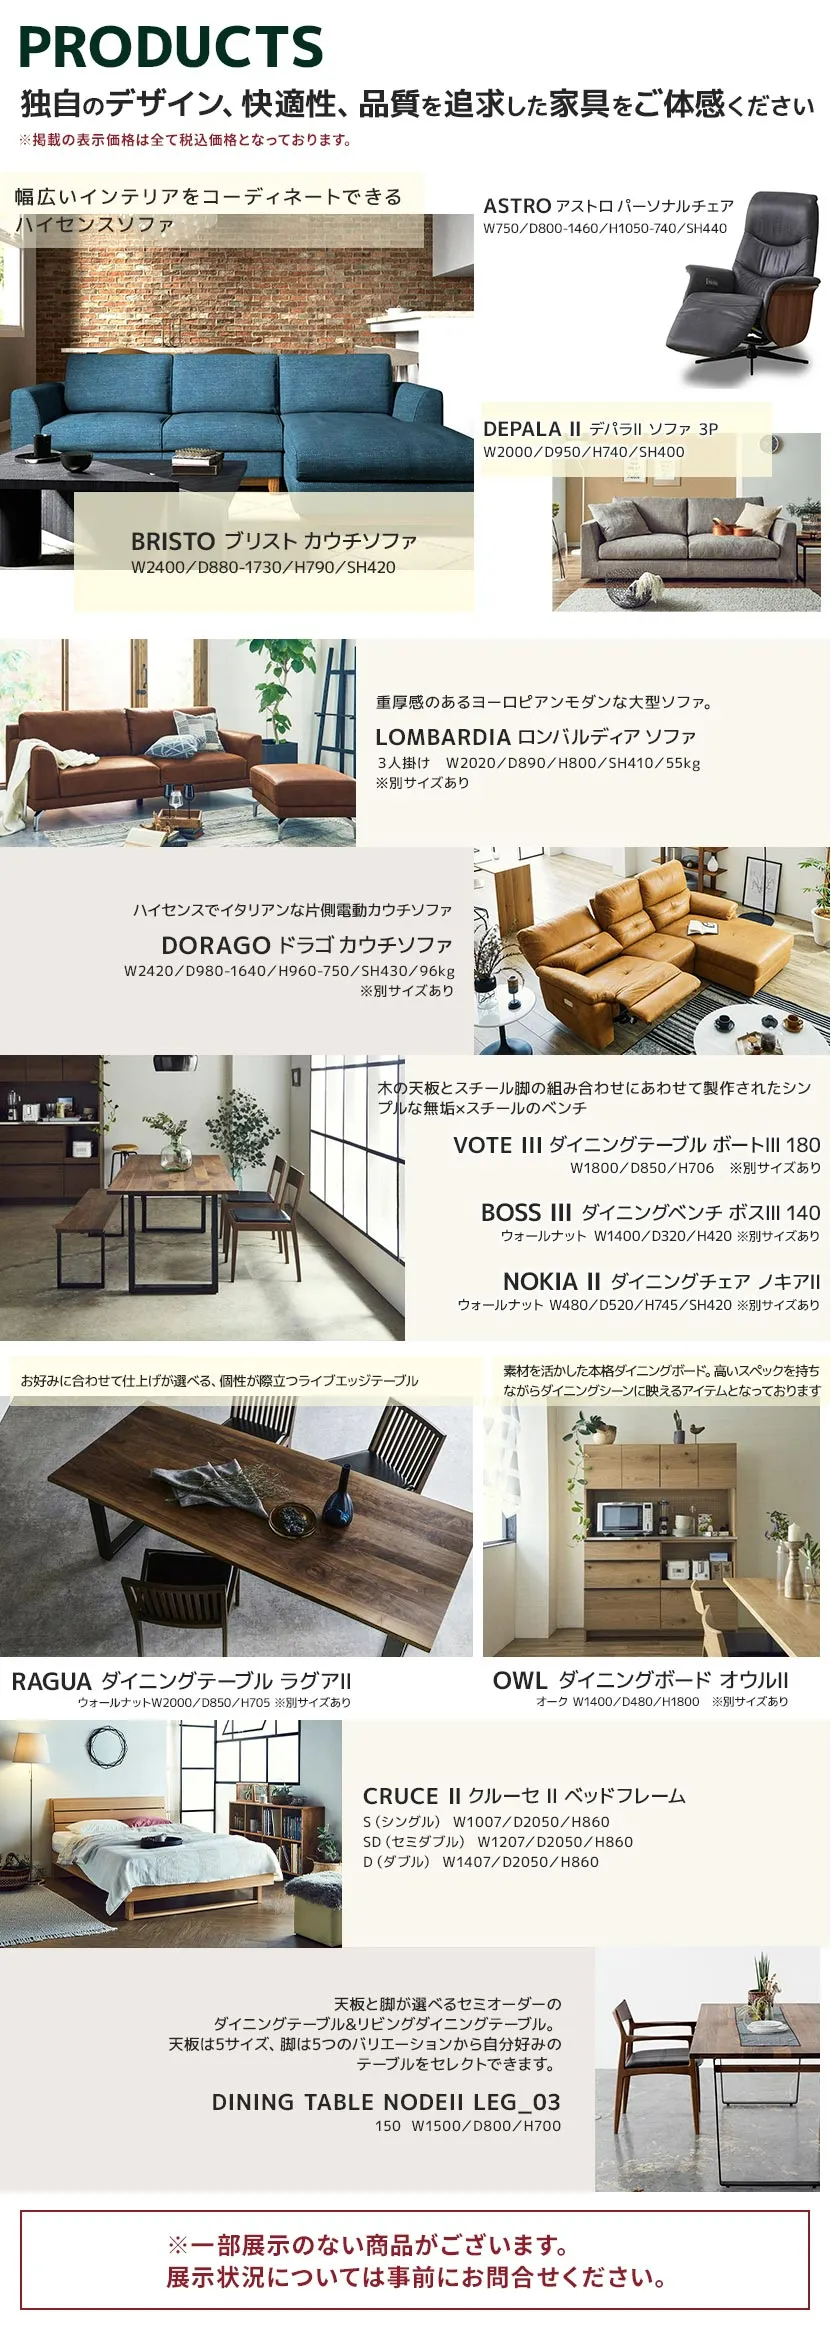 PRODUCTS 独自のデザイン、快適性、品質を追求した家具をご体感ください